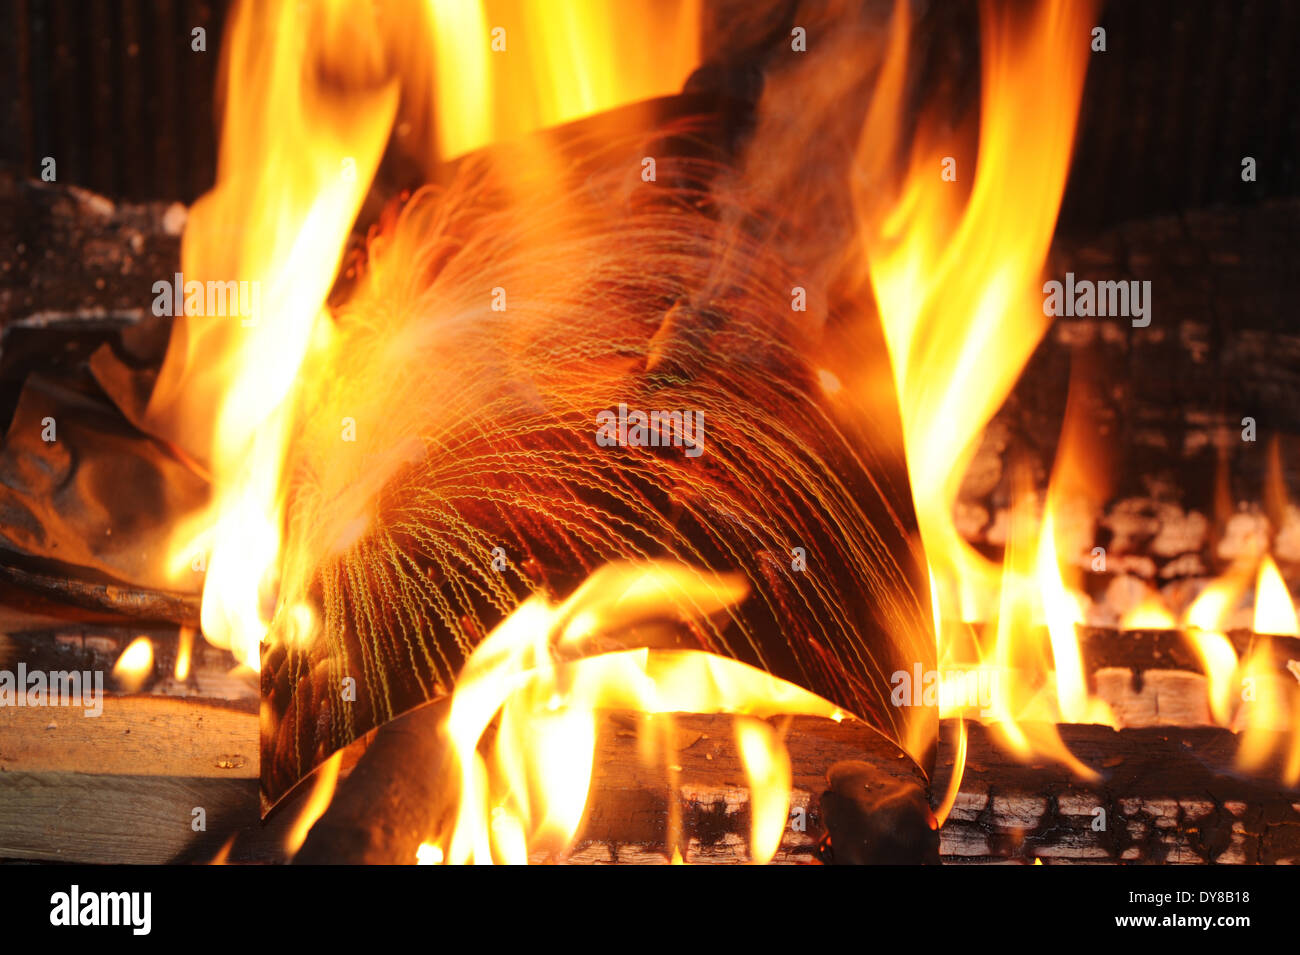 Fuego, chimenea, hoguera, Cheminee, madera, calidez, quemar energía Foto de stock